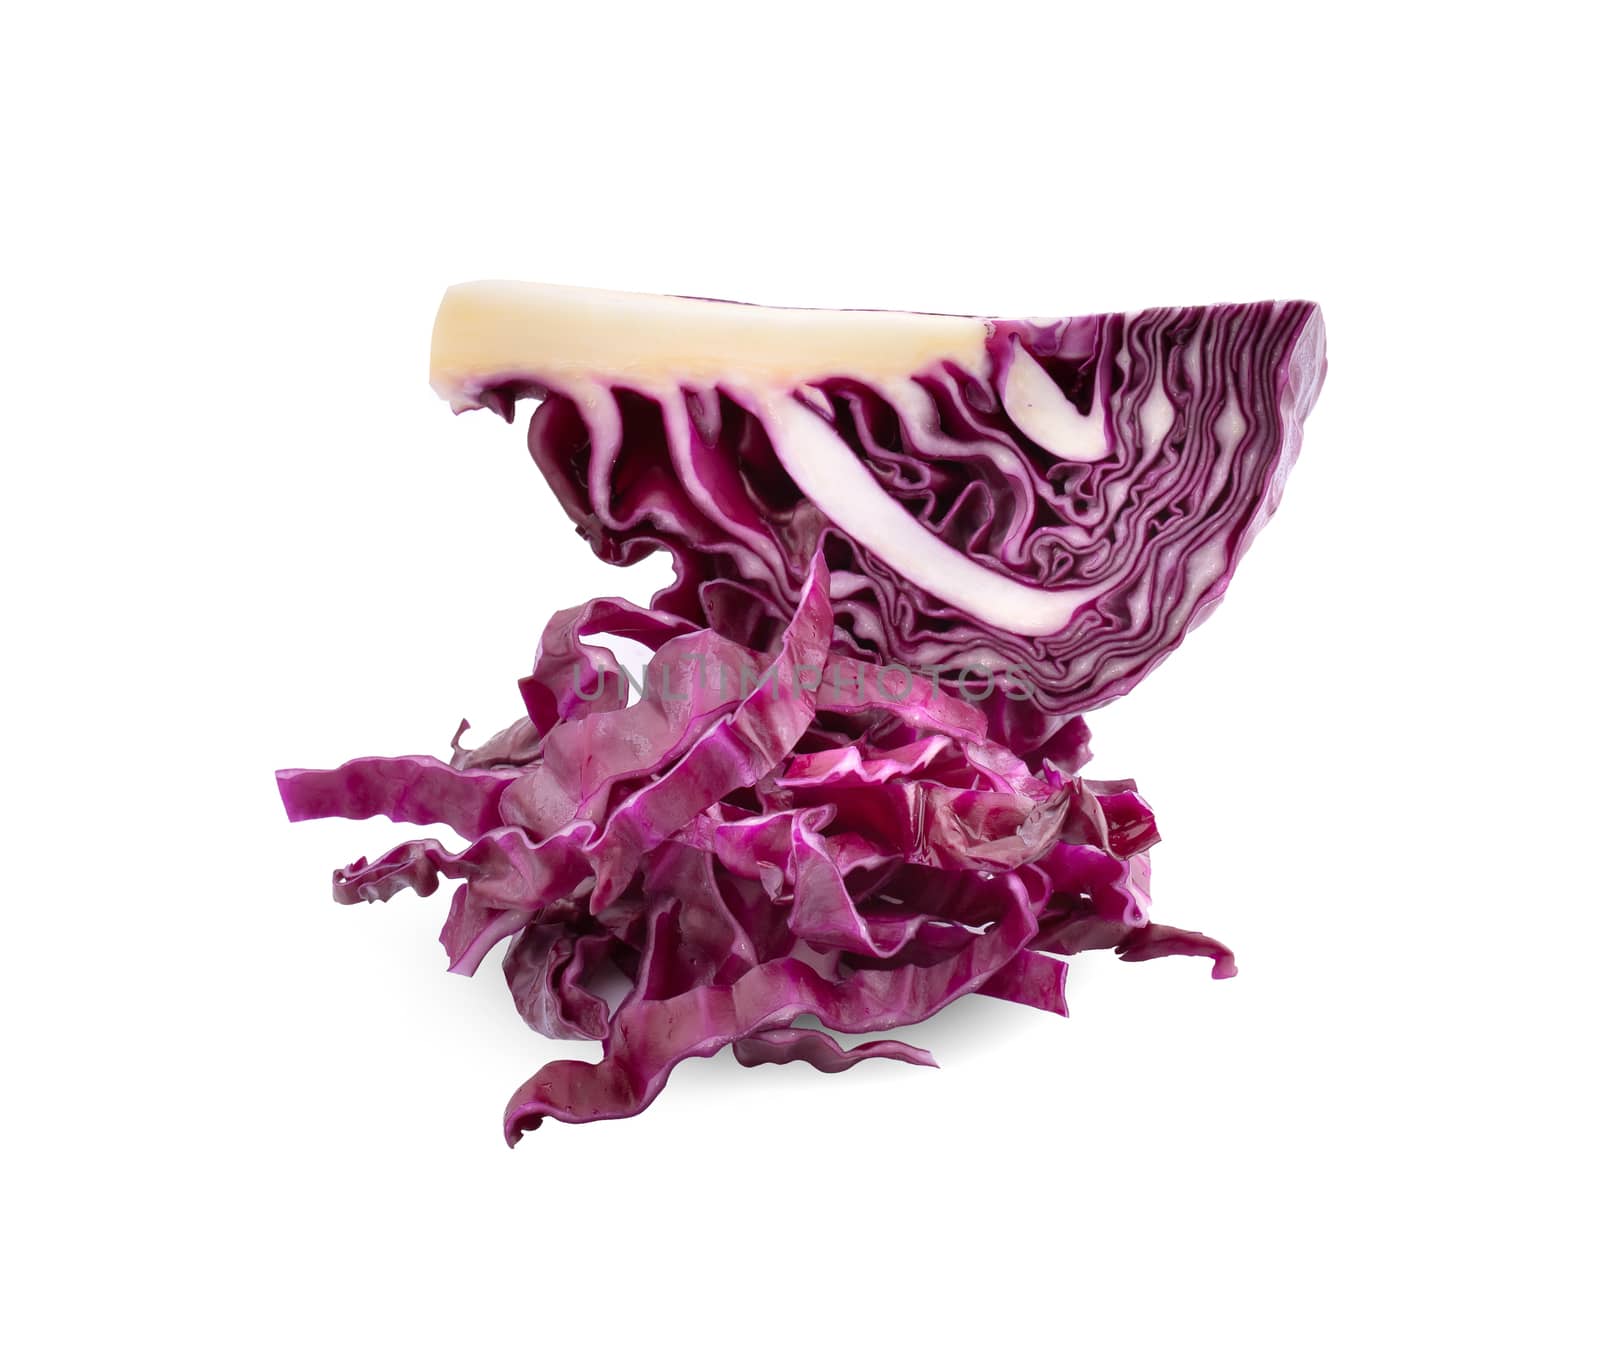 Purple cabbage isolated on white background  by freedomnaruk